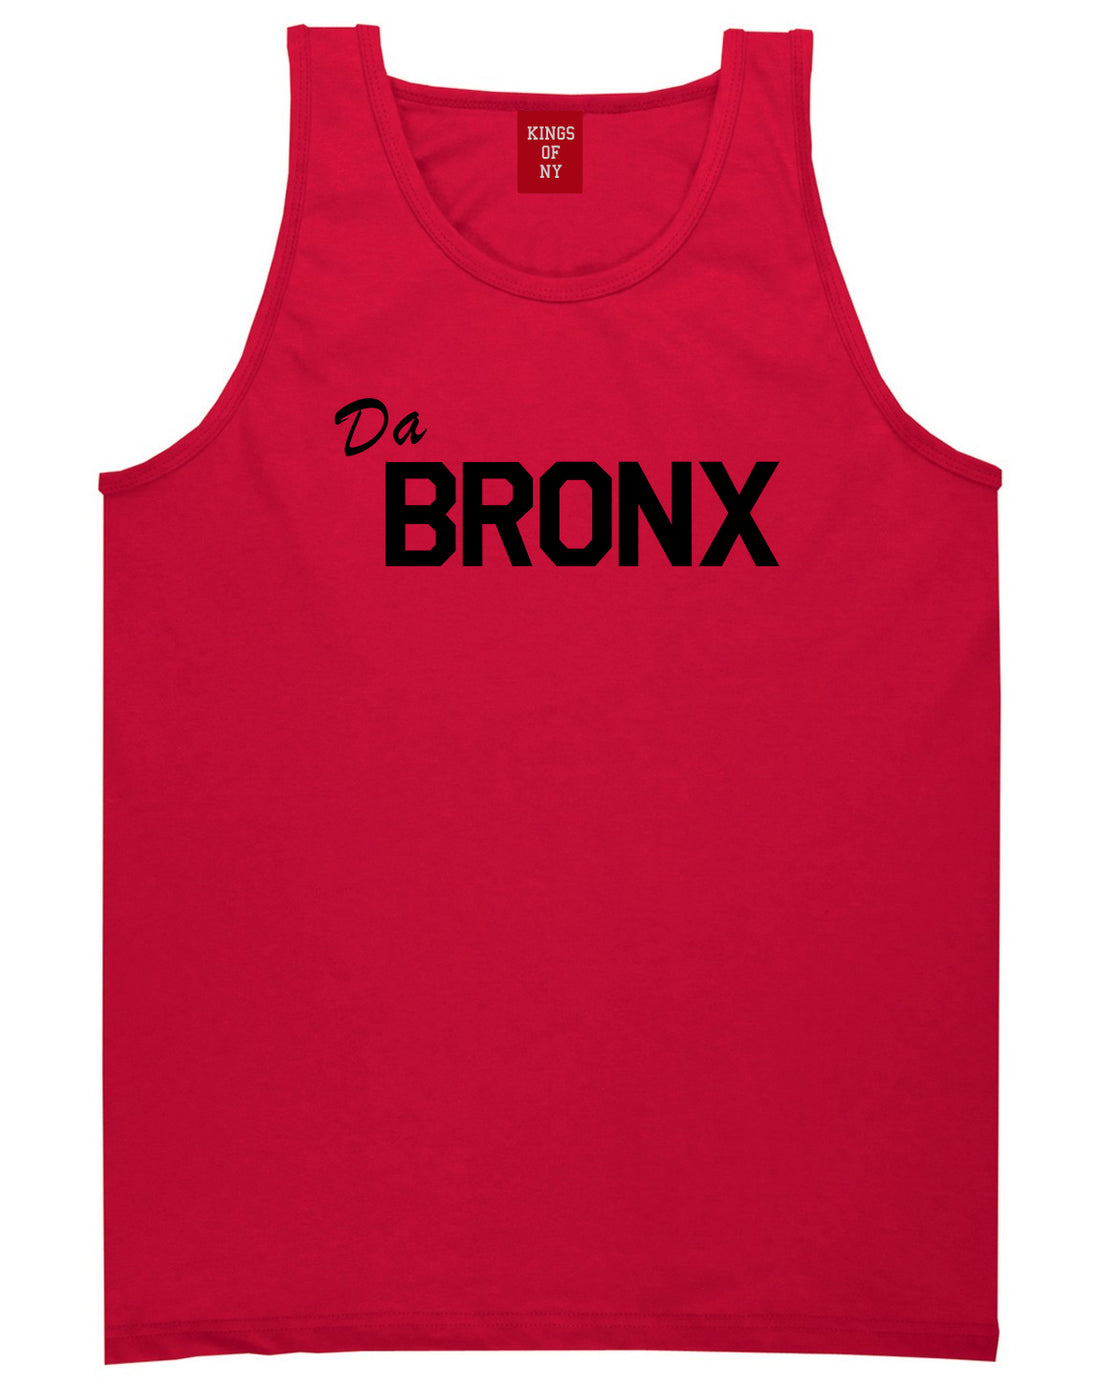 Da Bronx Mens Tank Top Shirt Red by Kings Of NY